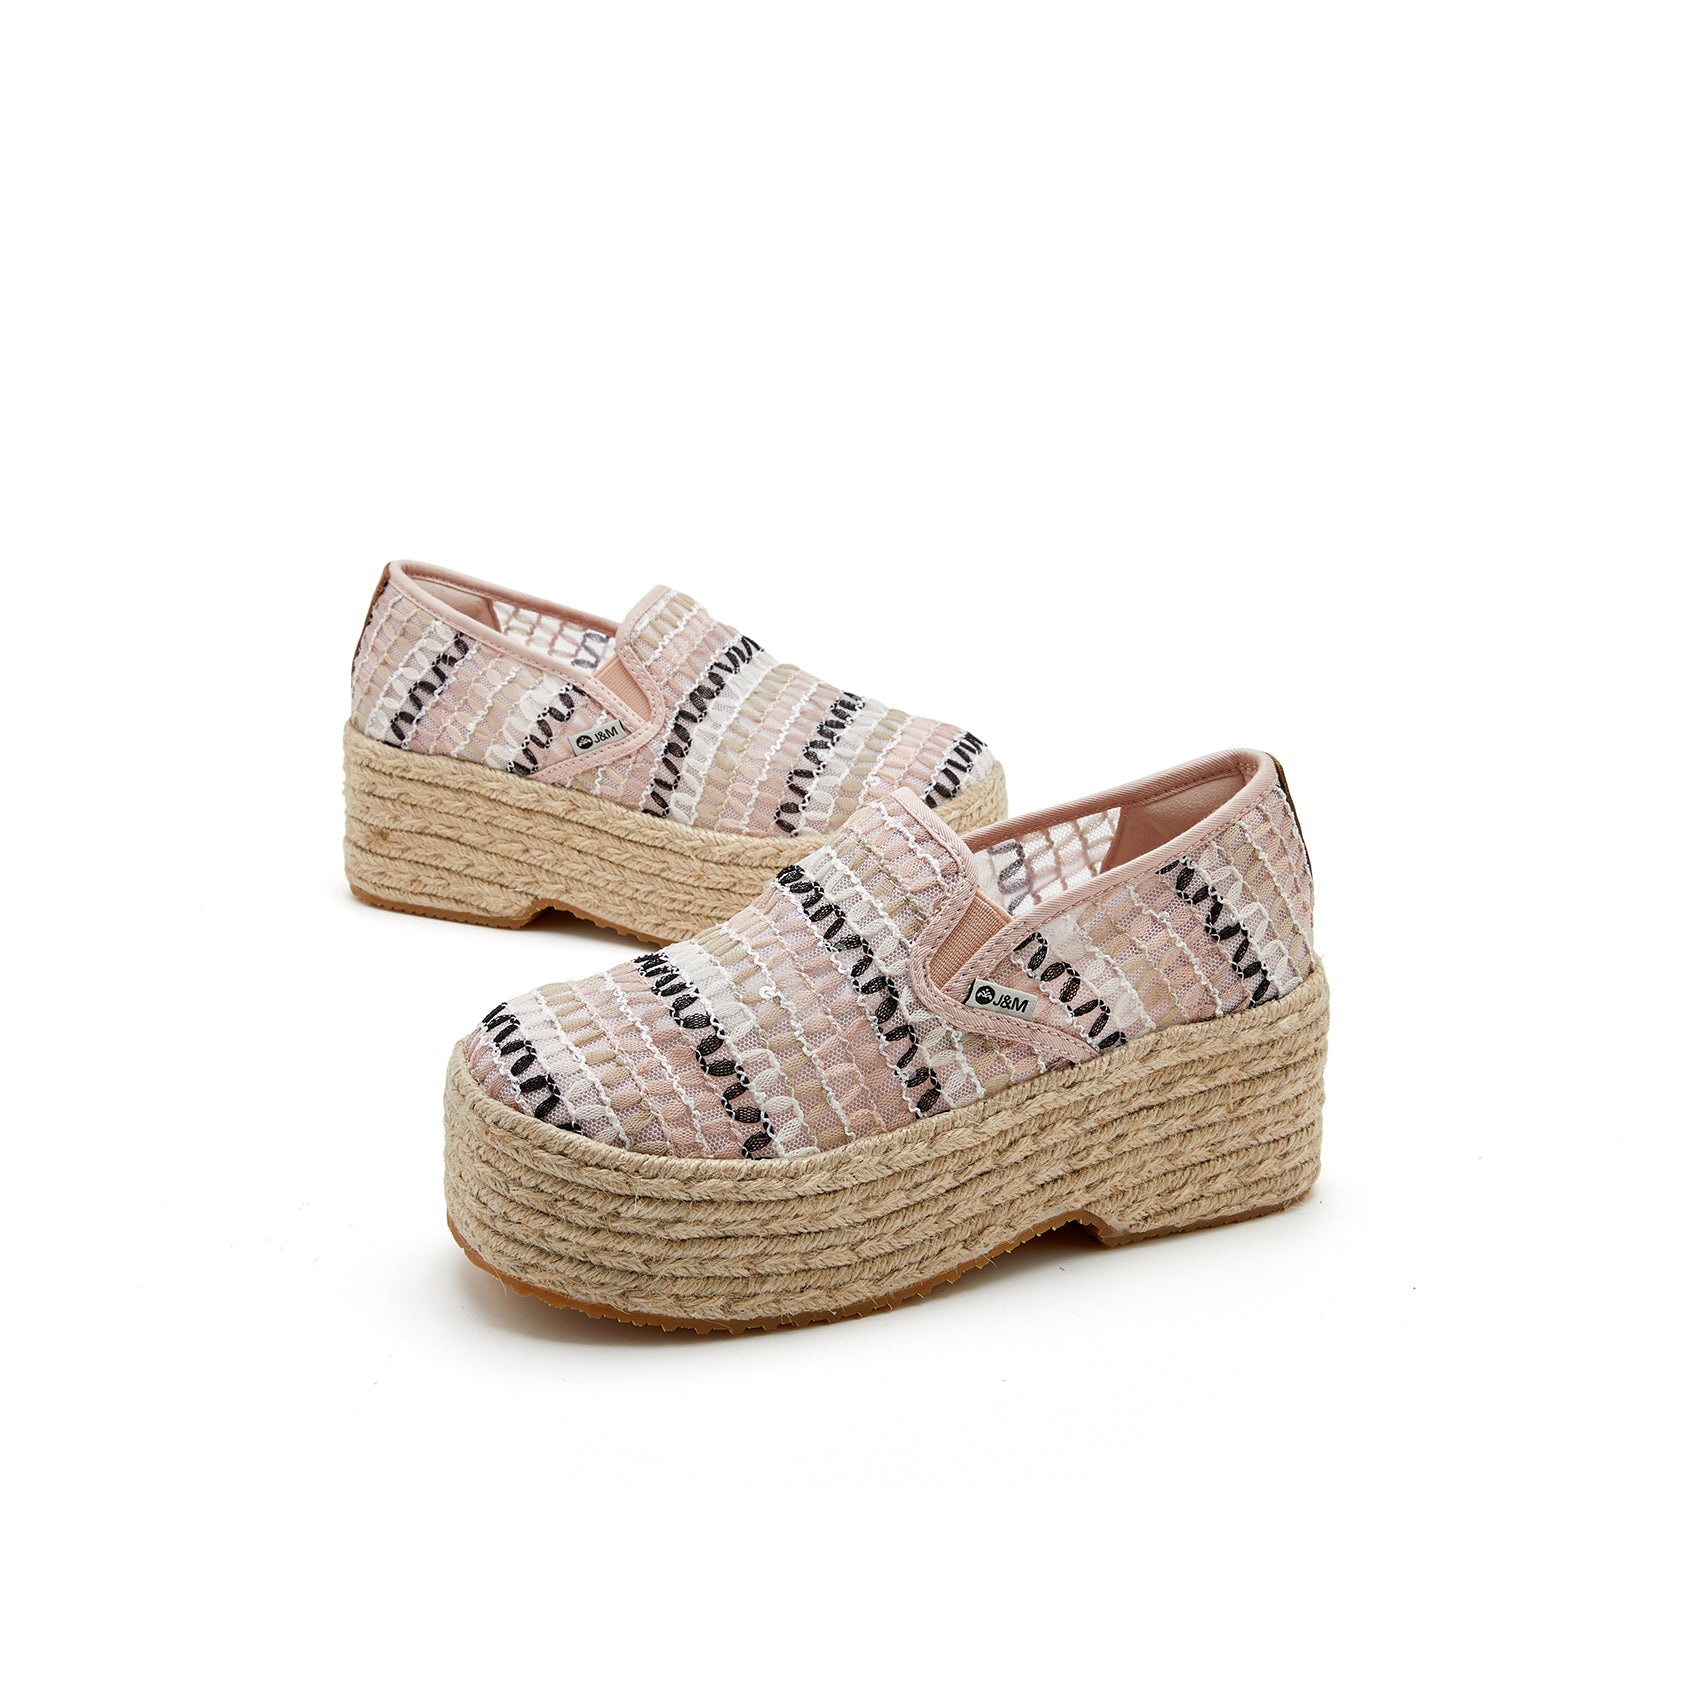 JOY&MARIO Handmade Women’s Slip-On Espadrille Mesh Loafers Wedges in Pink-86181W